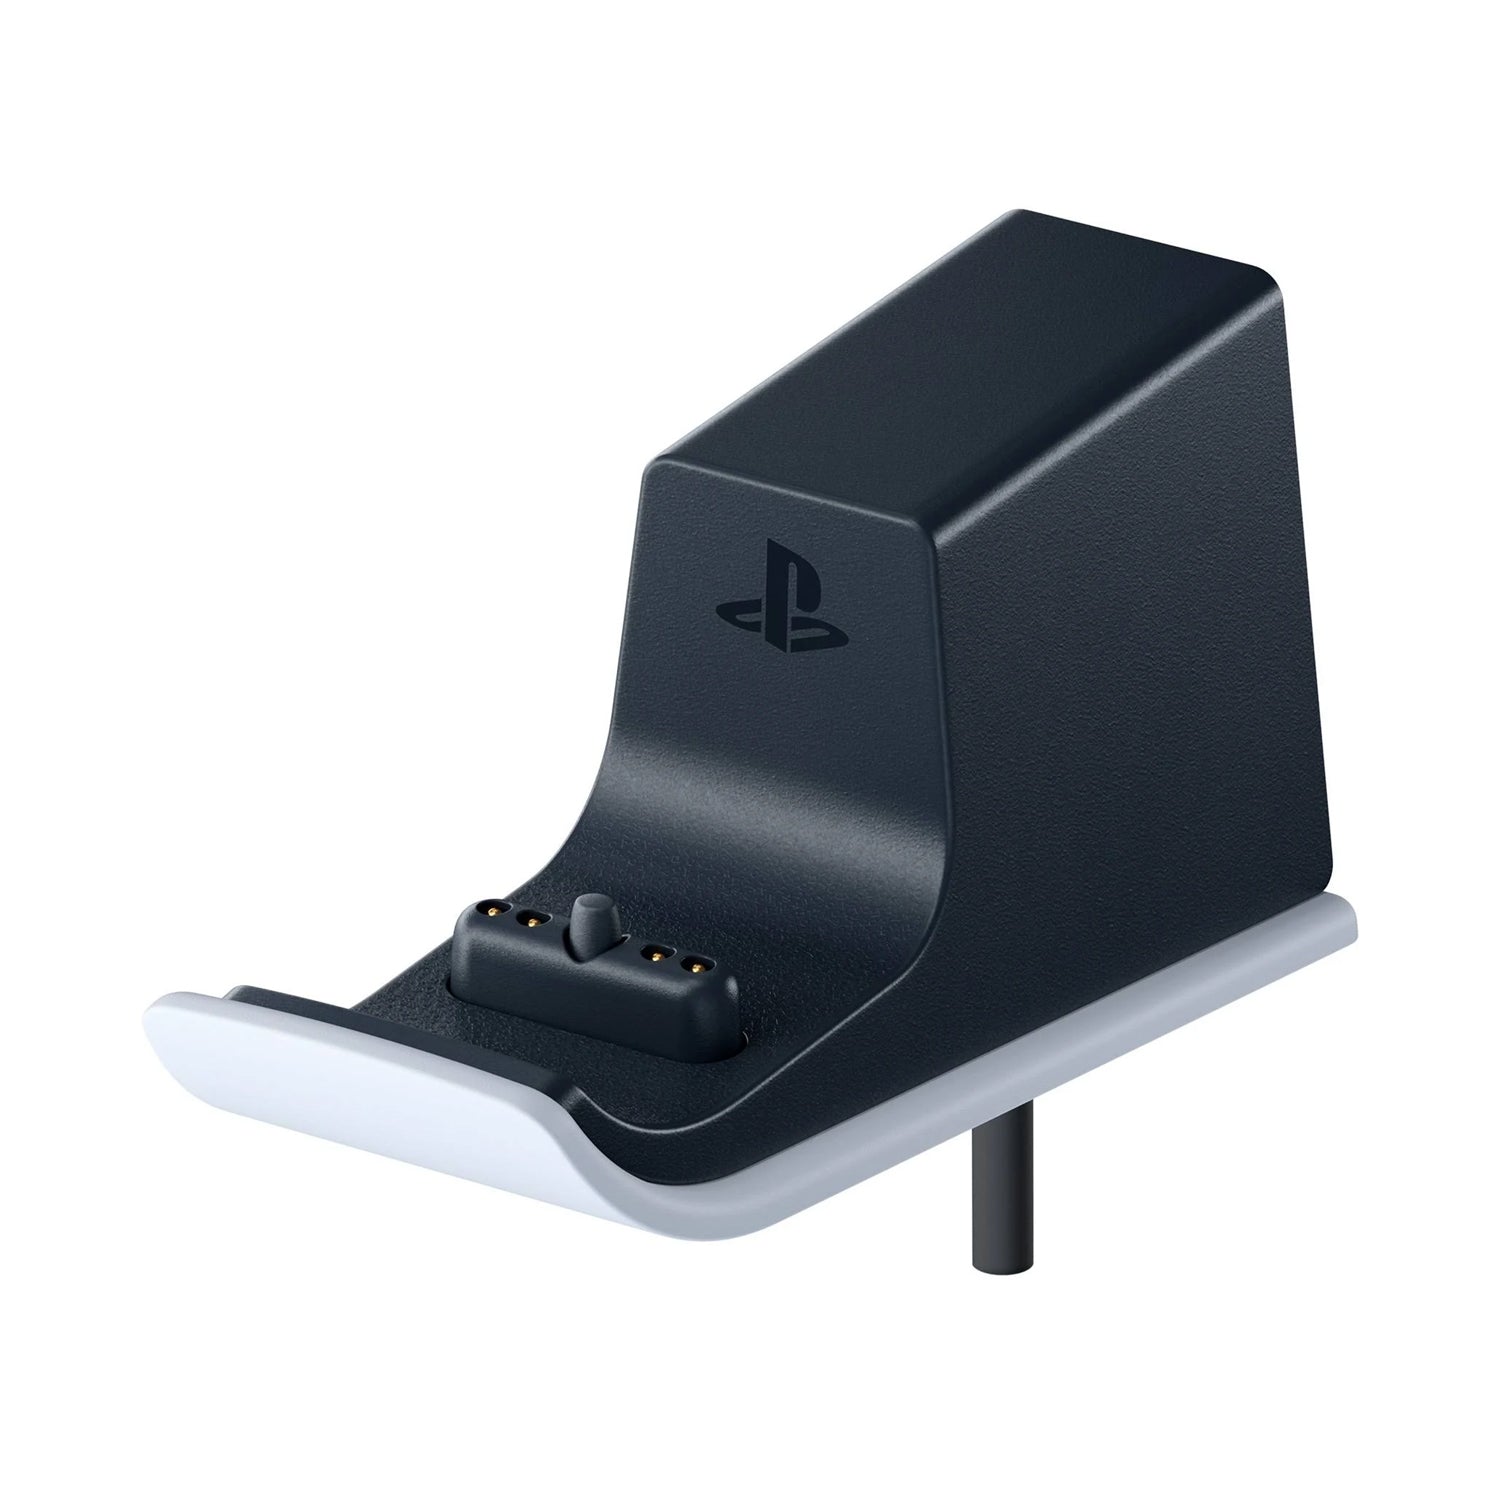 Sony PlayStation Pulse Elite Wireless Headset